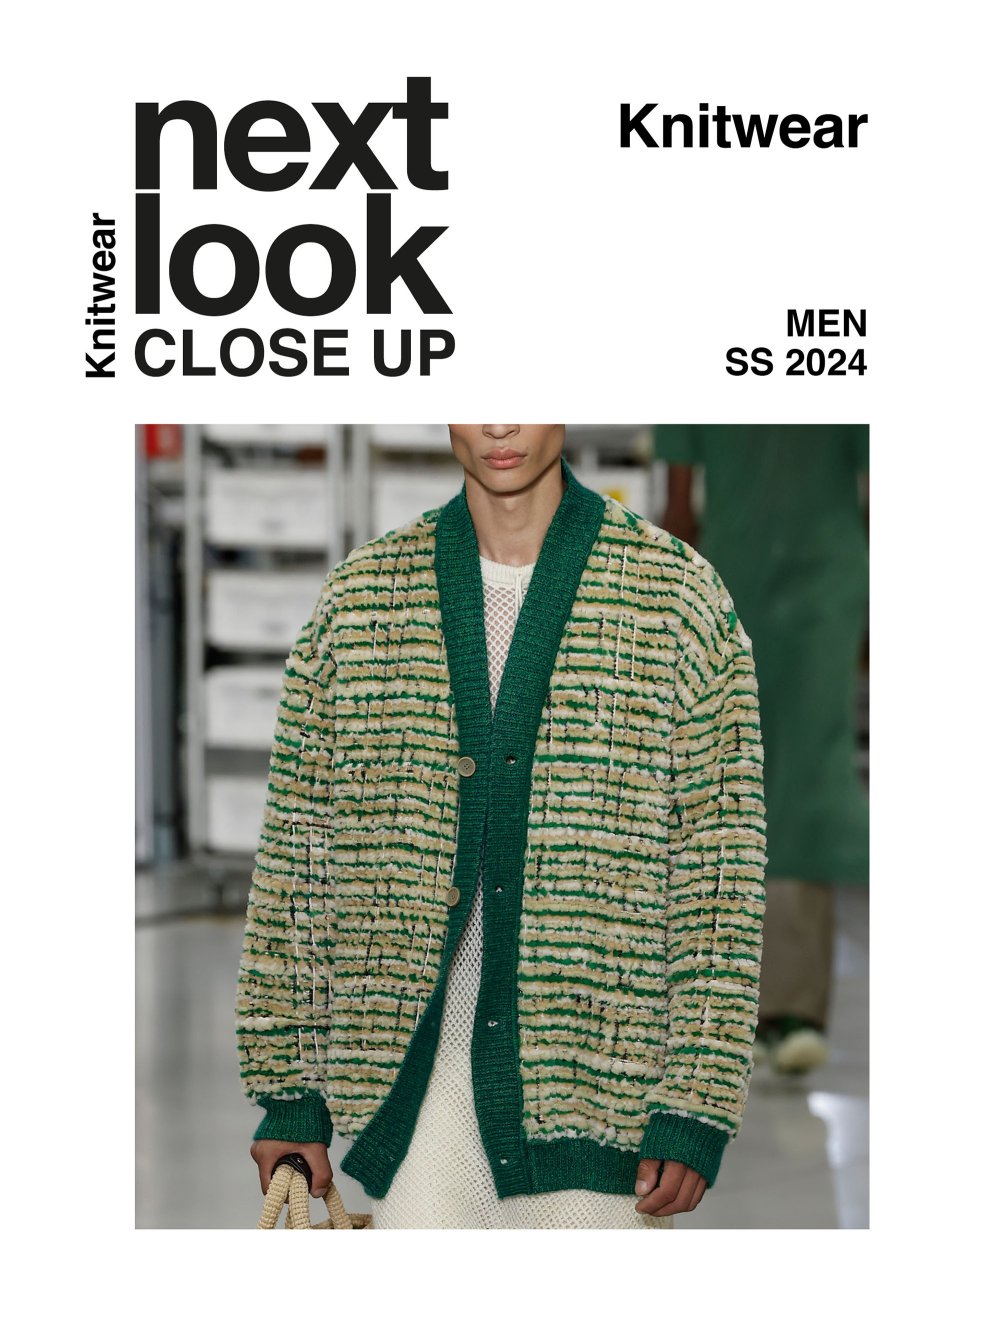 Next Look Close UP Men Knitwear S/S 2024